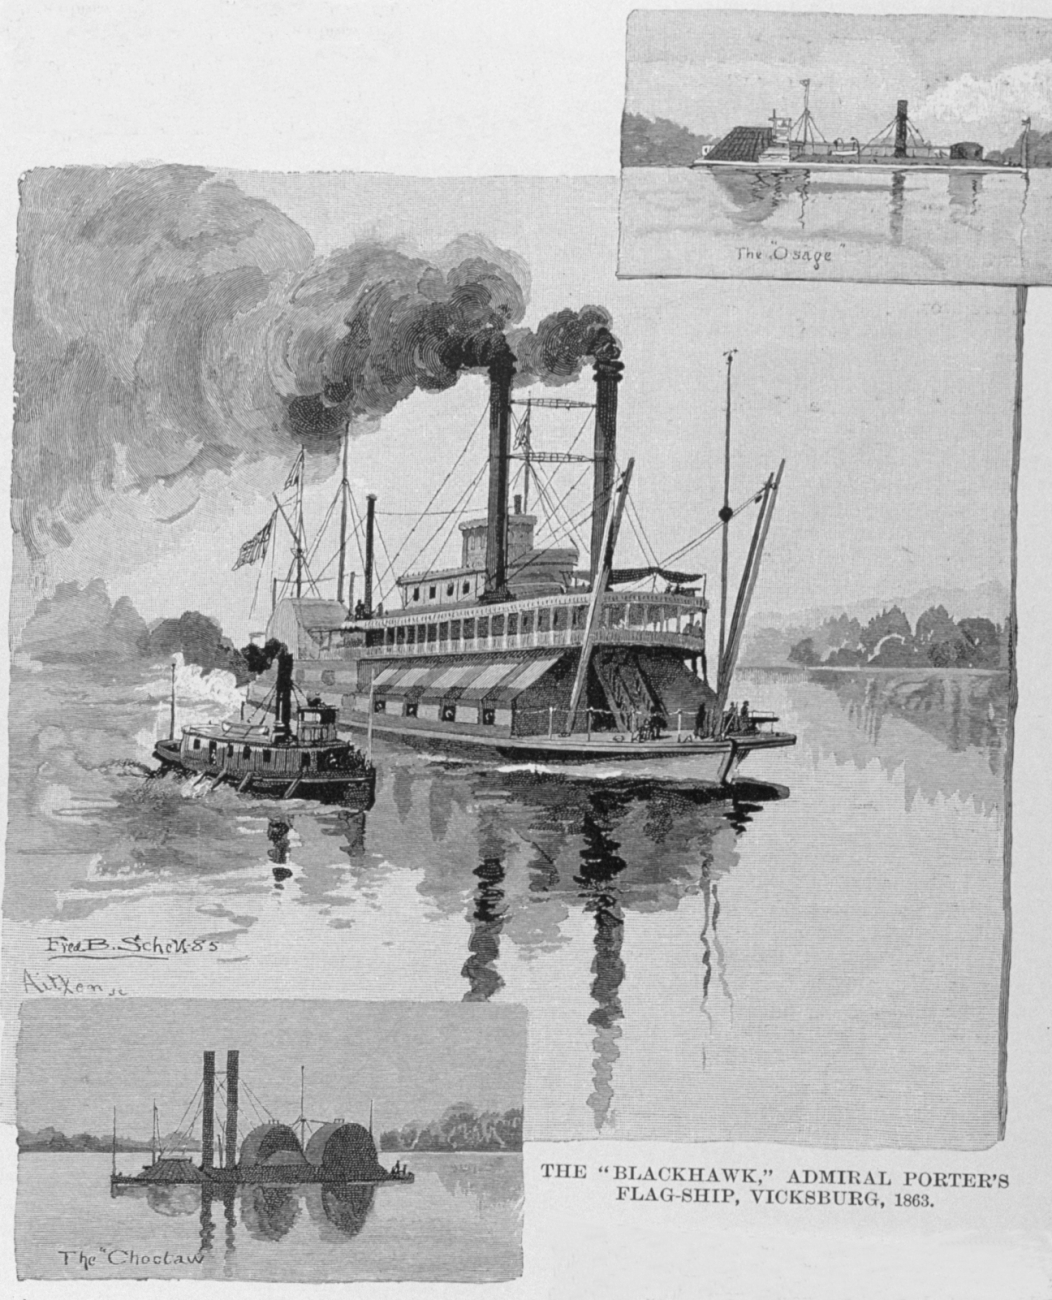 The BLACKHAWK, Admiral Porter's flagship during the Vicksburg campaign